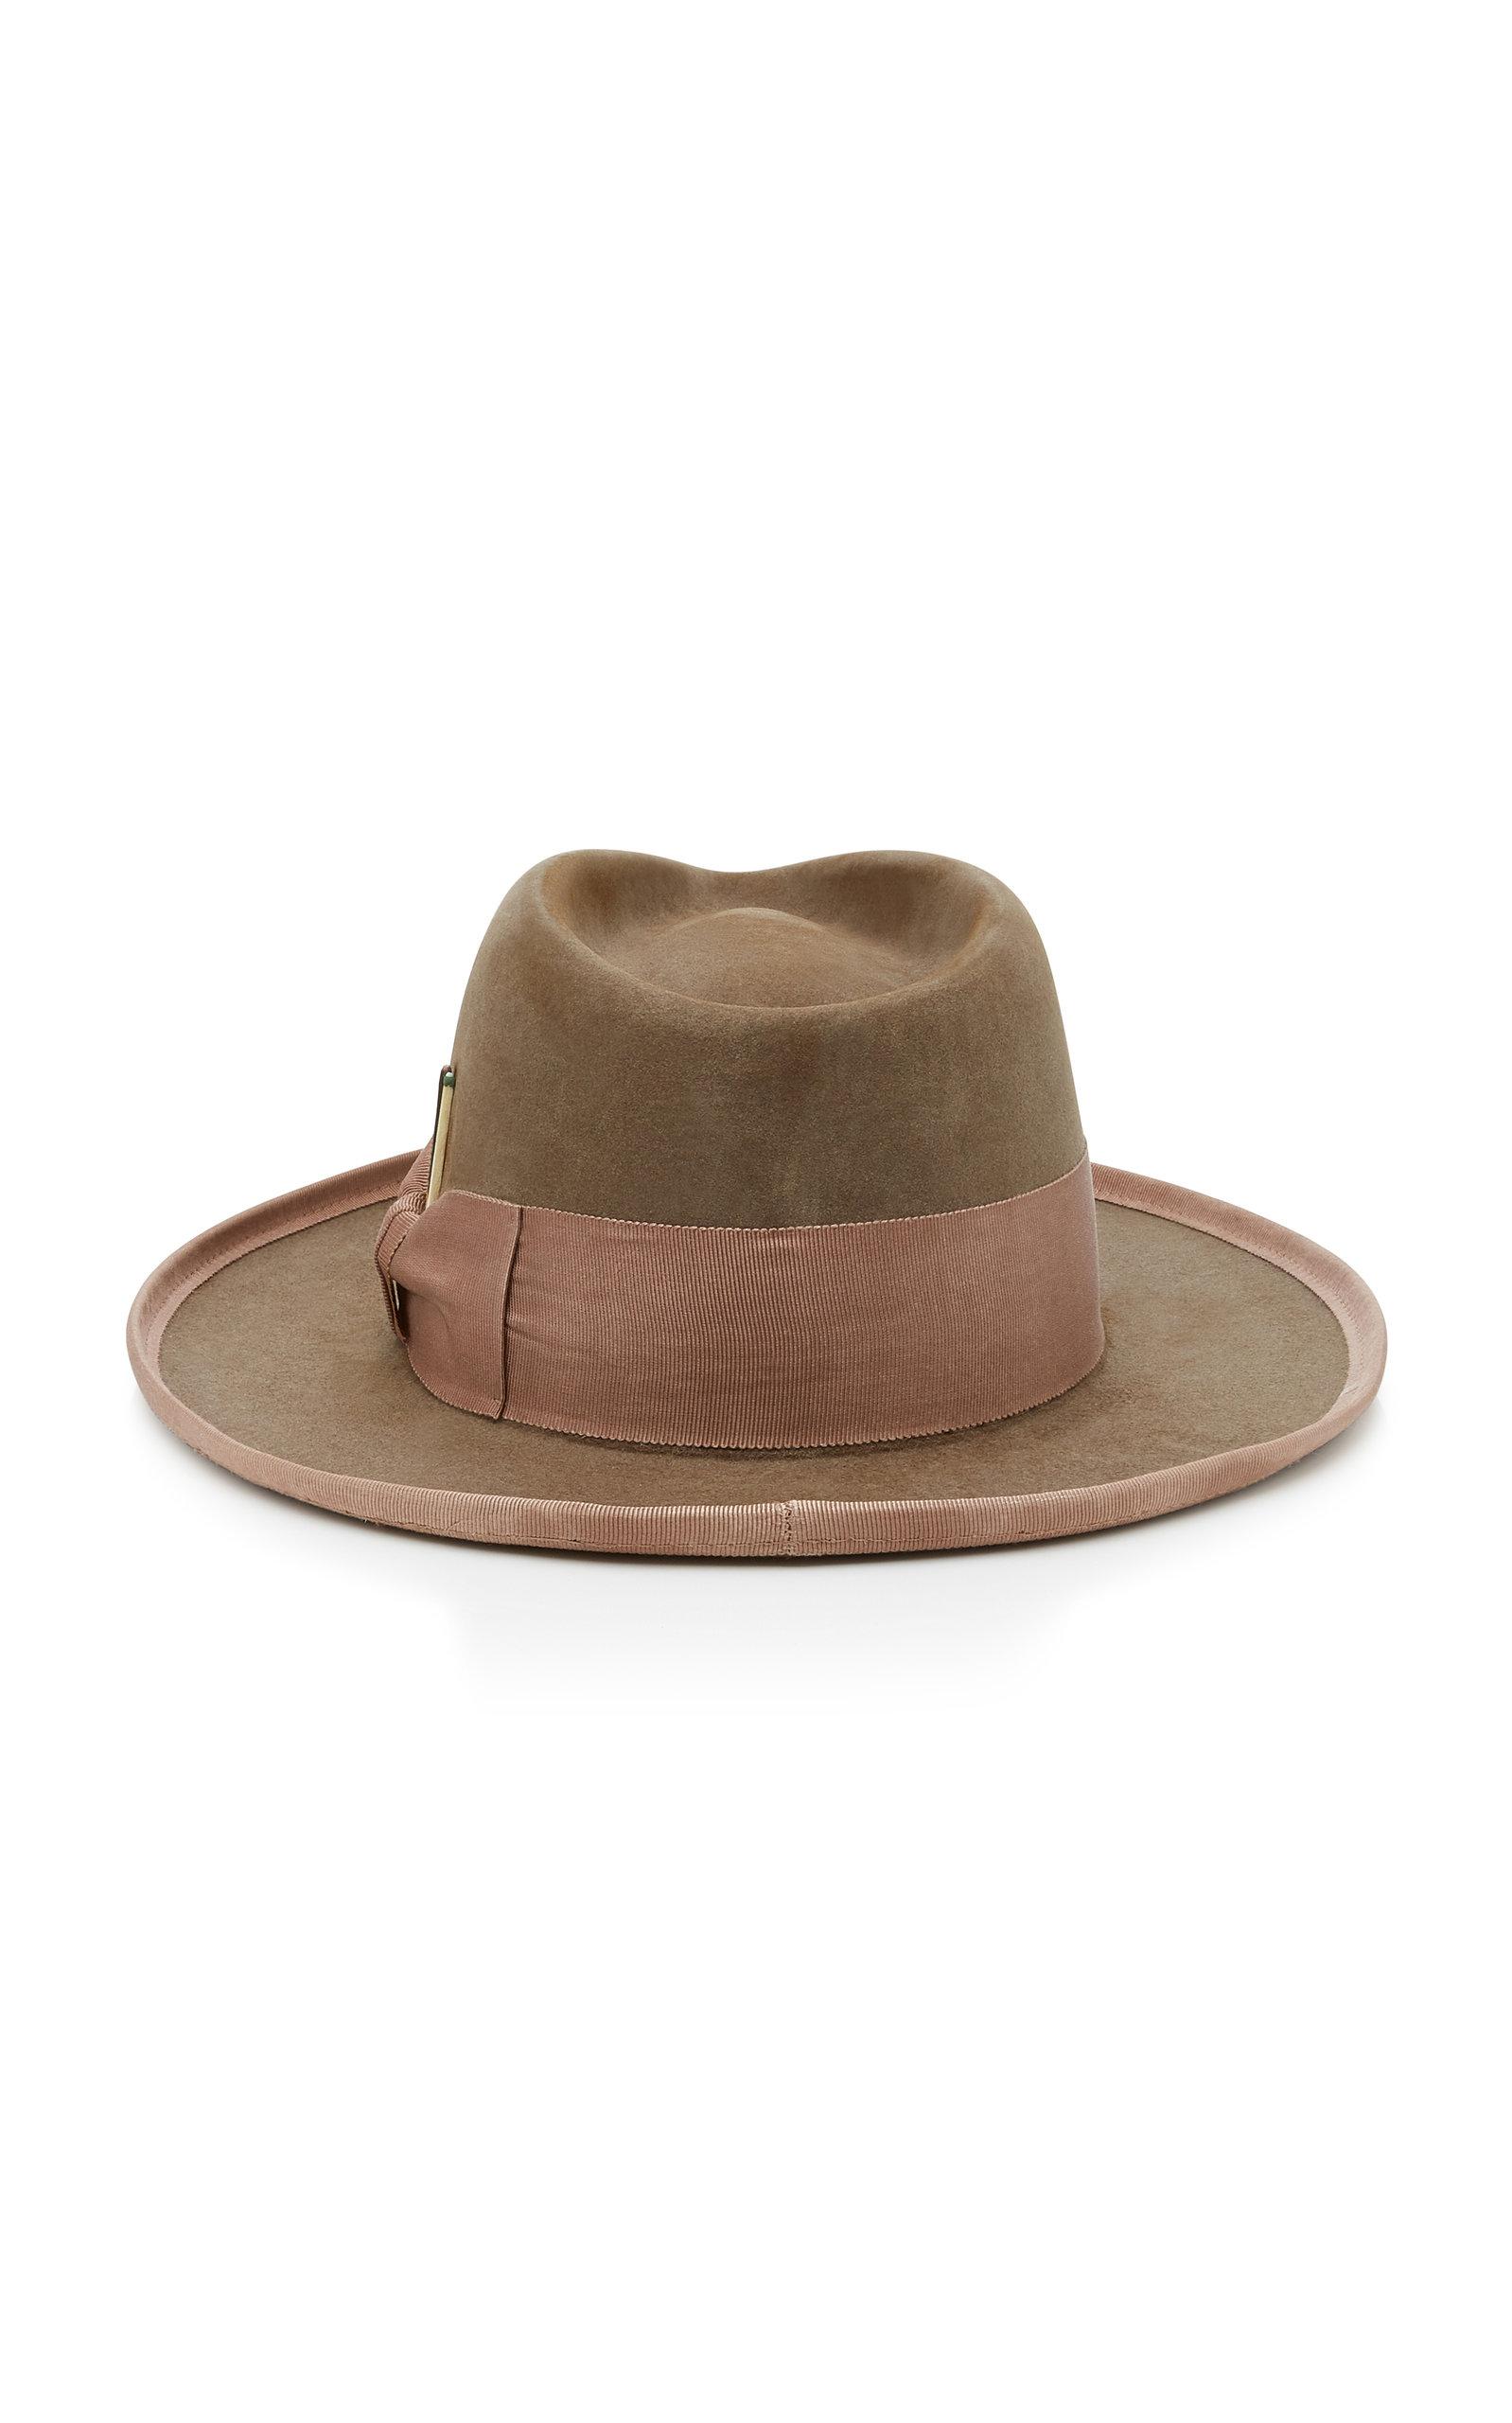 Nick Fouquet Felt Exclusive Crystal Mist Hat in Brown for Men - Lyst